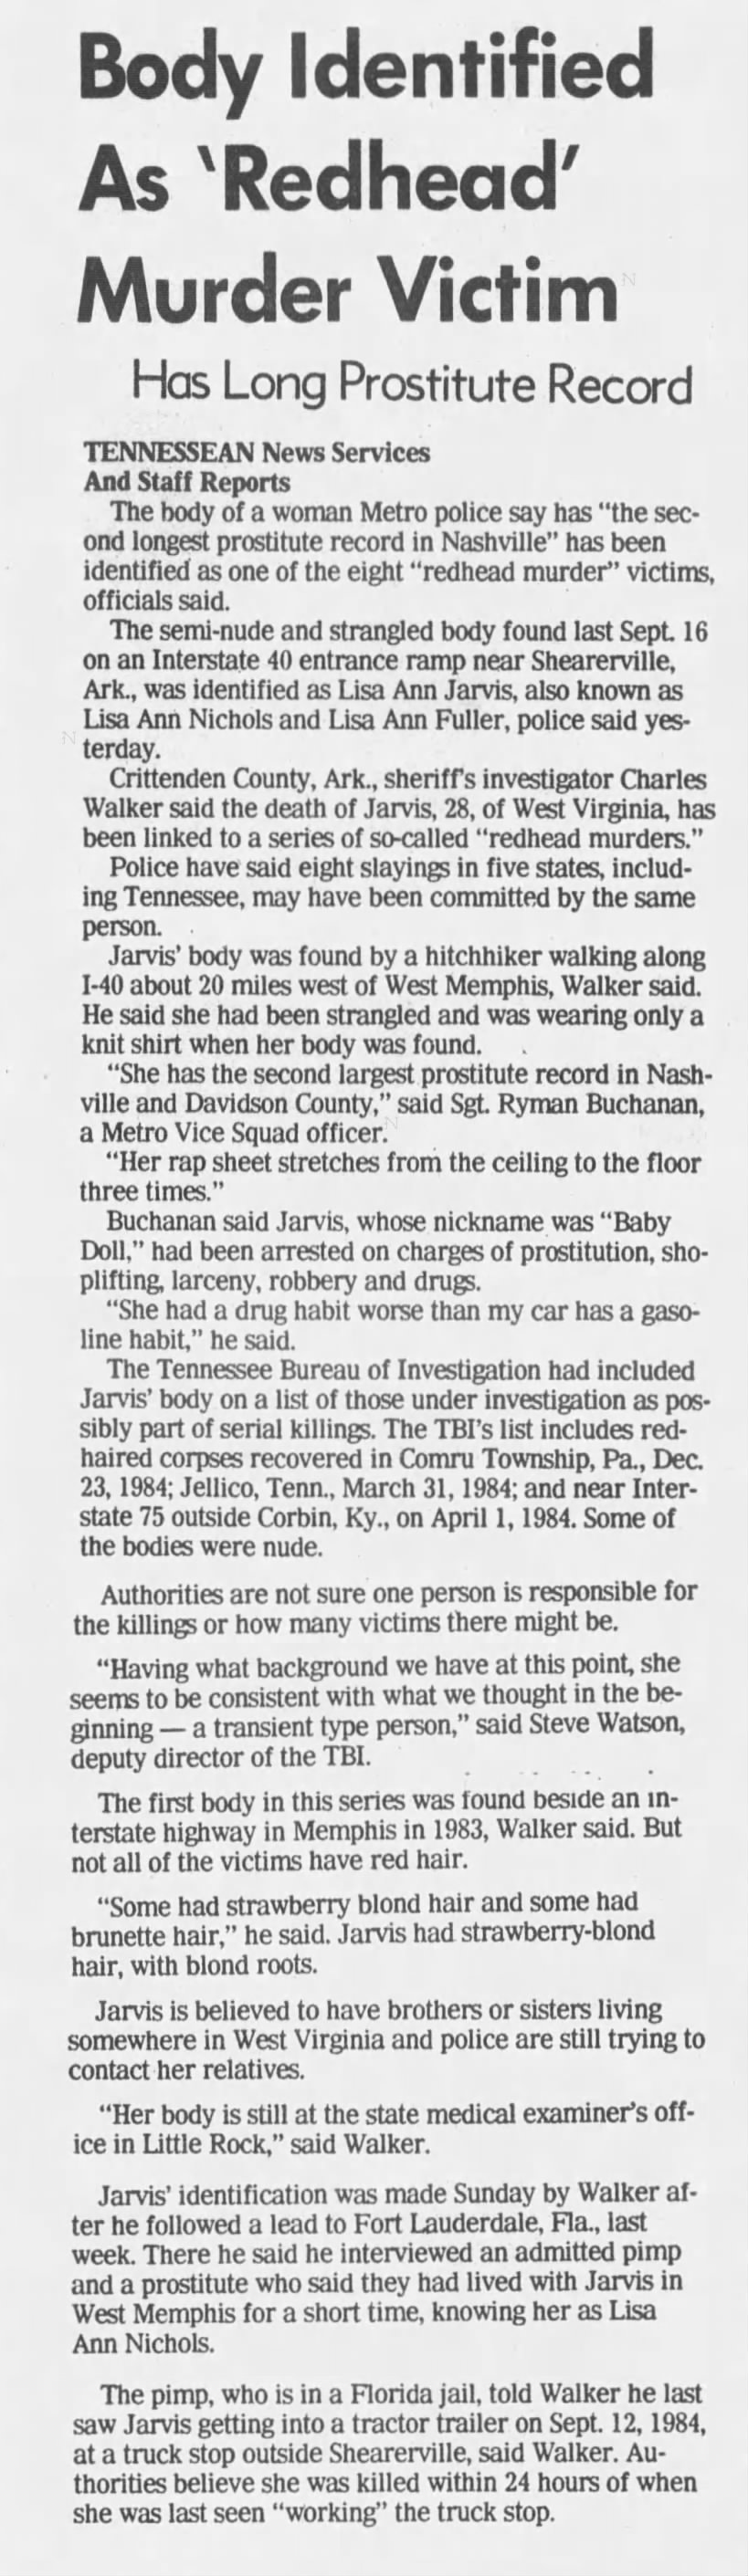 June 26, 1985 "Body Identified As 'Redhead' Murder Victim"